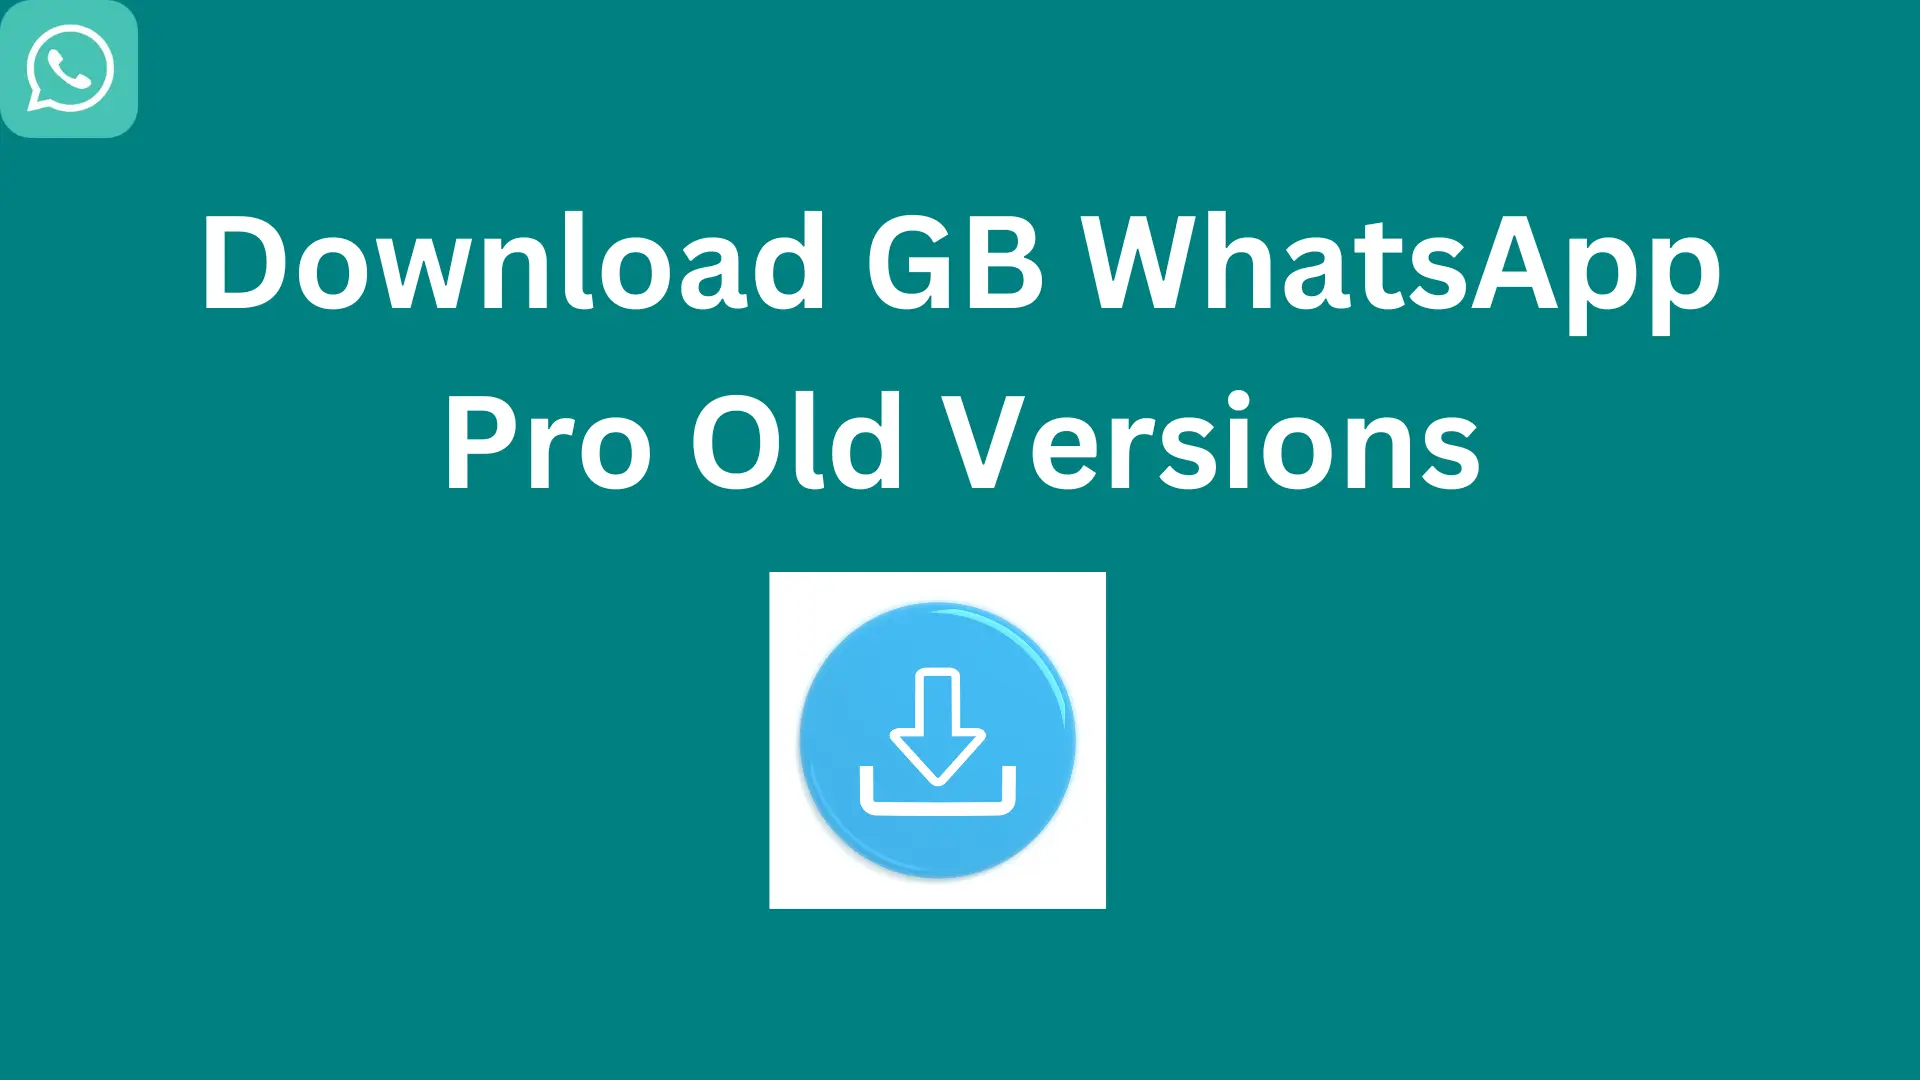 gb whatsapp pro old versions 1